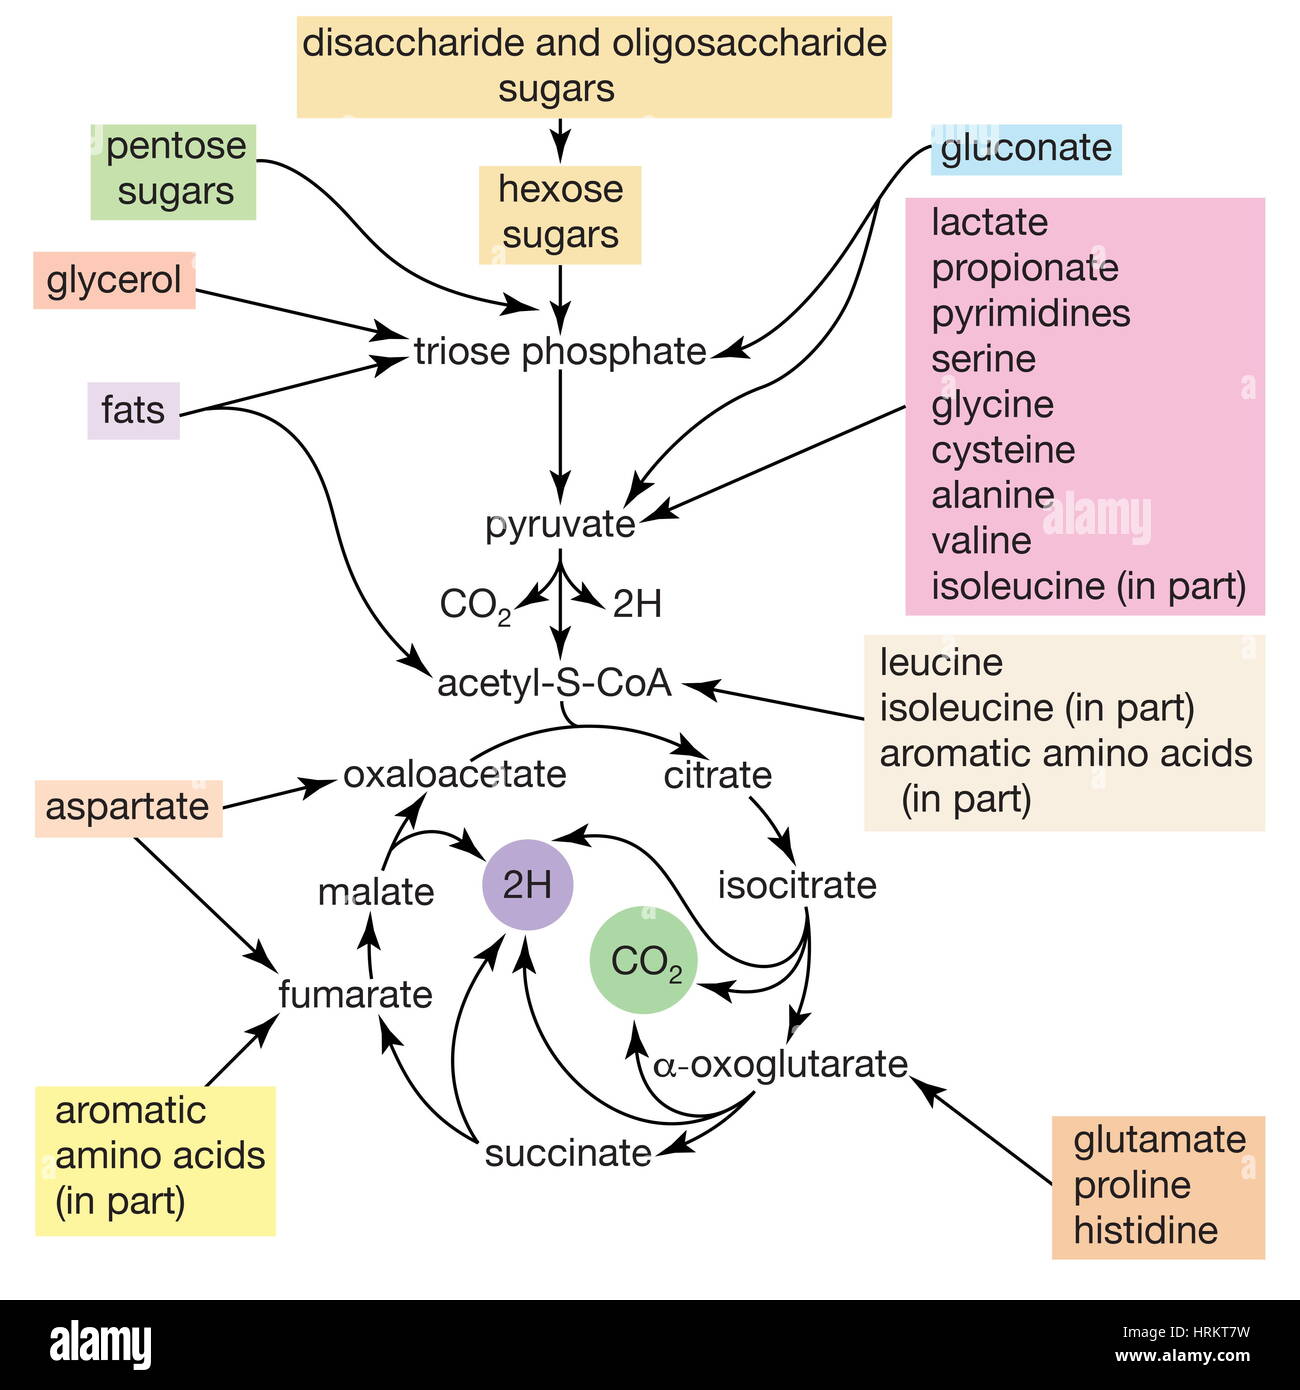 Disaccharide, Escherichia coli metabolism. Pathways for the catabolism of nutrients by Escherichia coli. Stock Photo